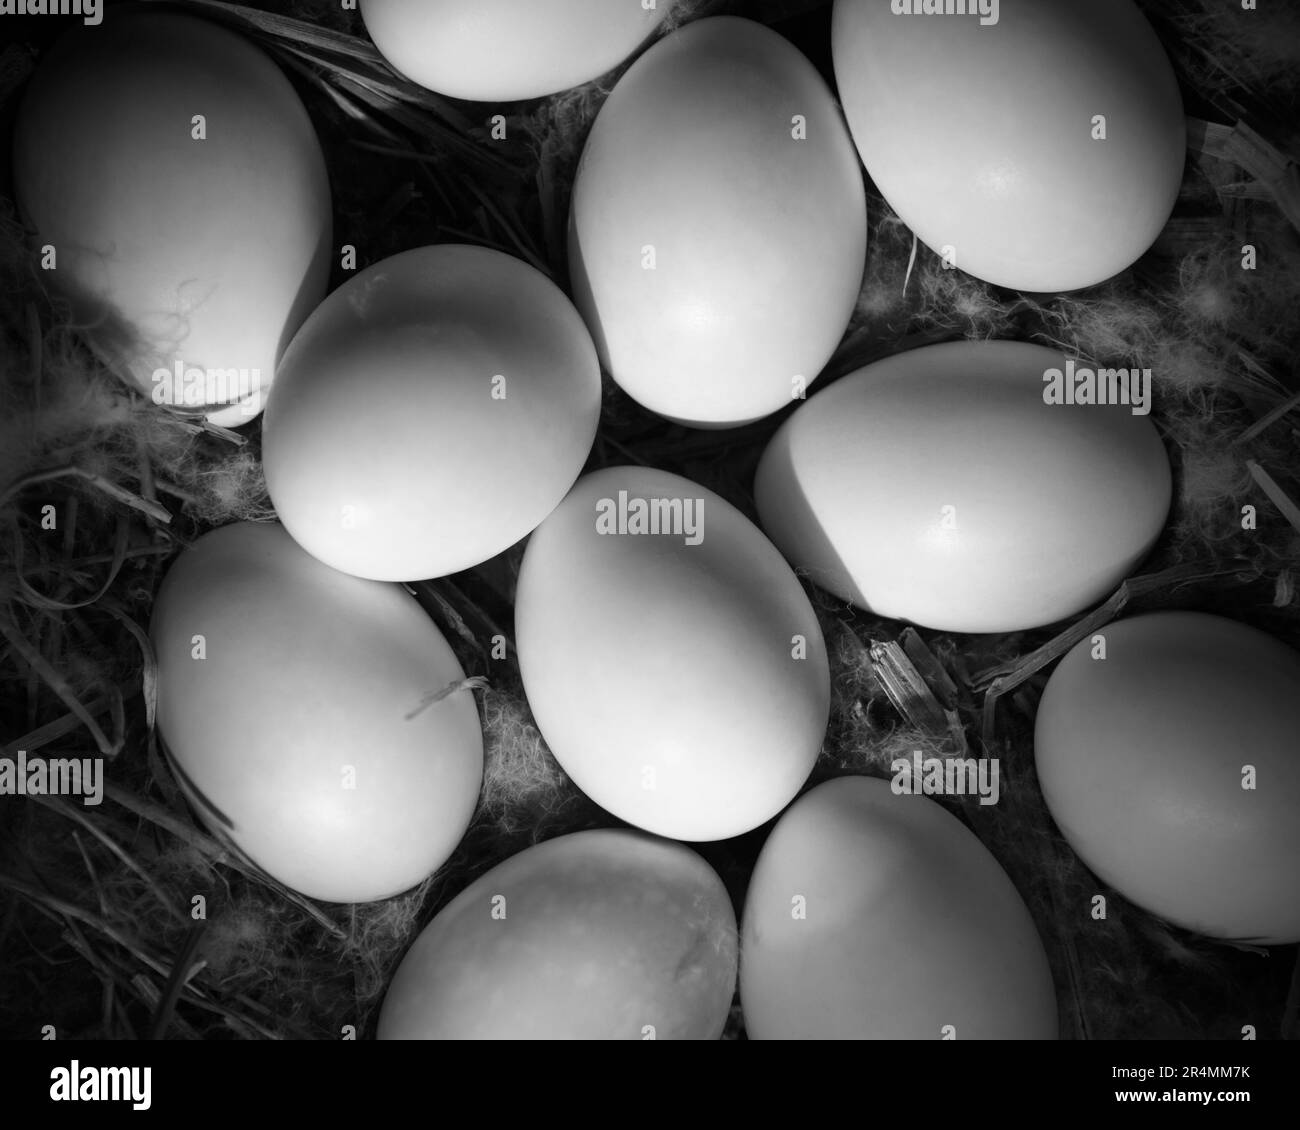 Birds eggs in a nest at a museum in Santa Barbara, California. Stock Photo